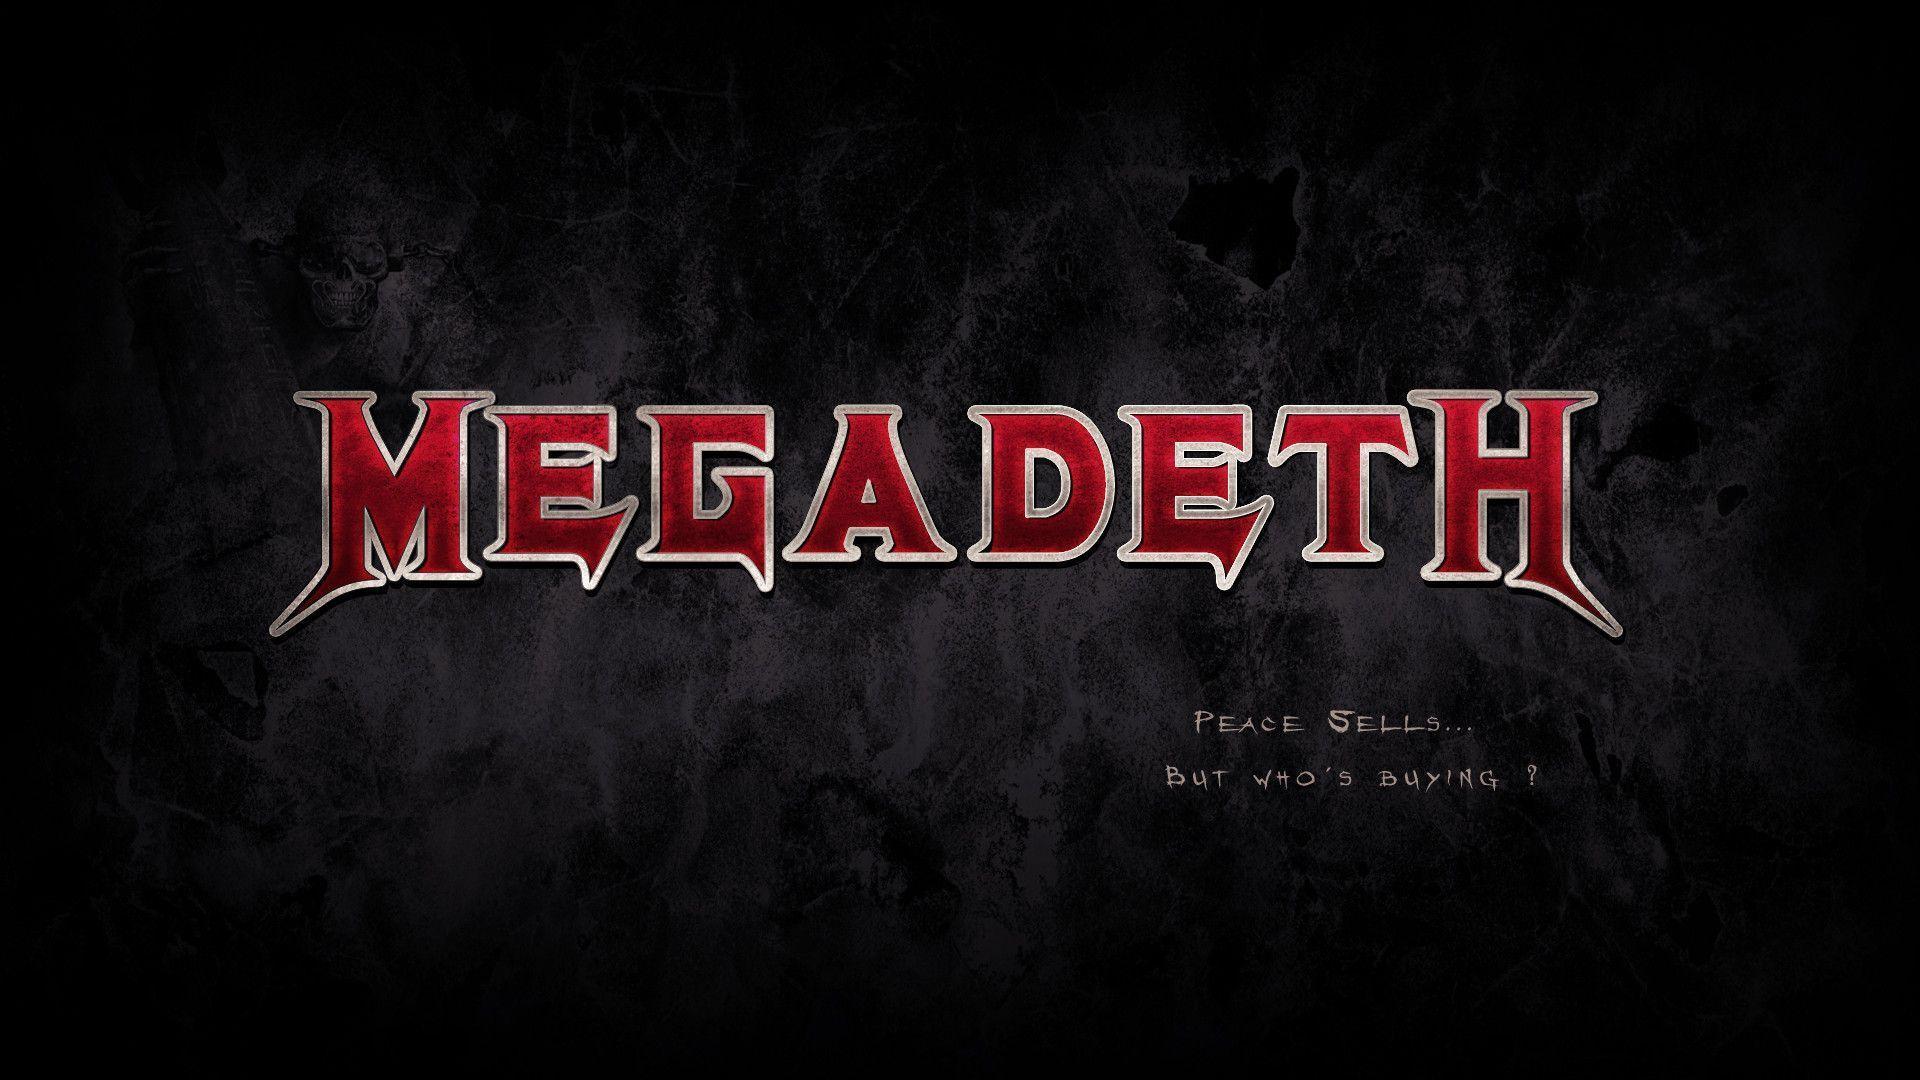 33 Megadeth Logo Hd Pictures Free Backround